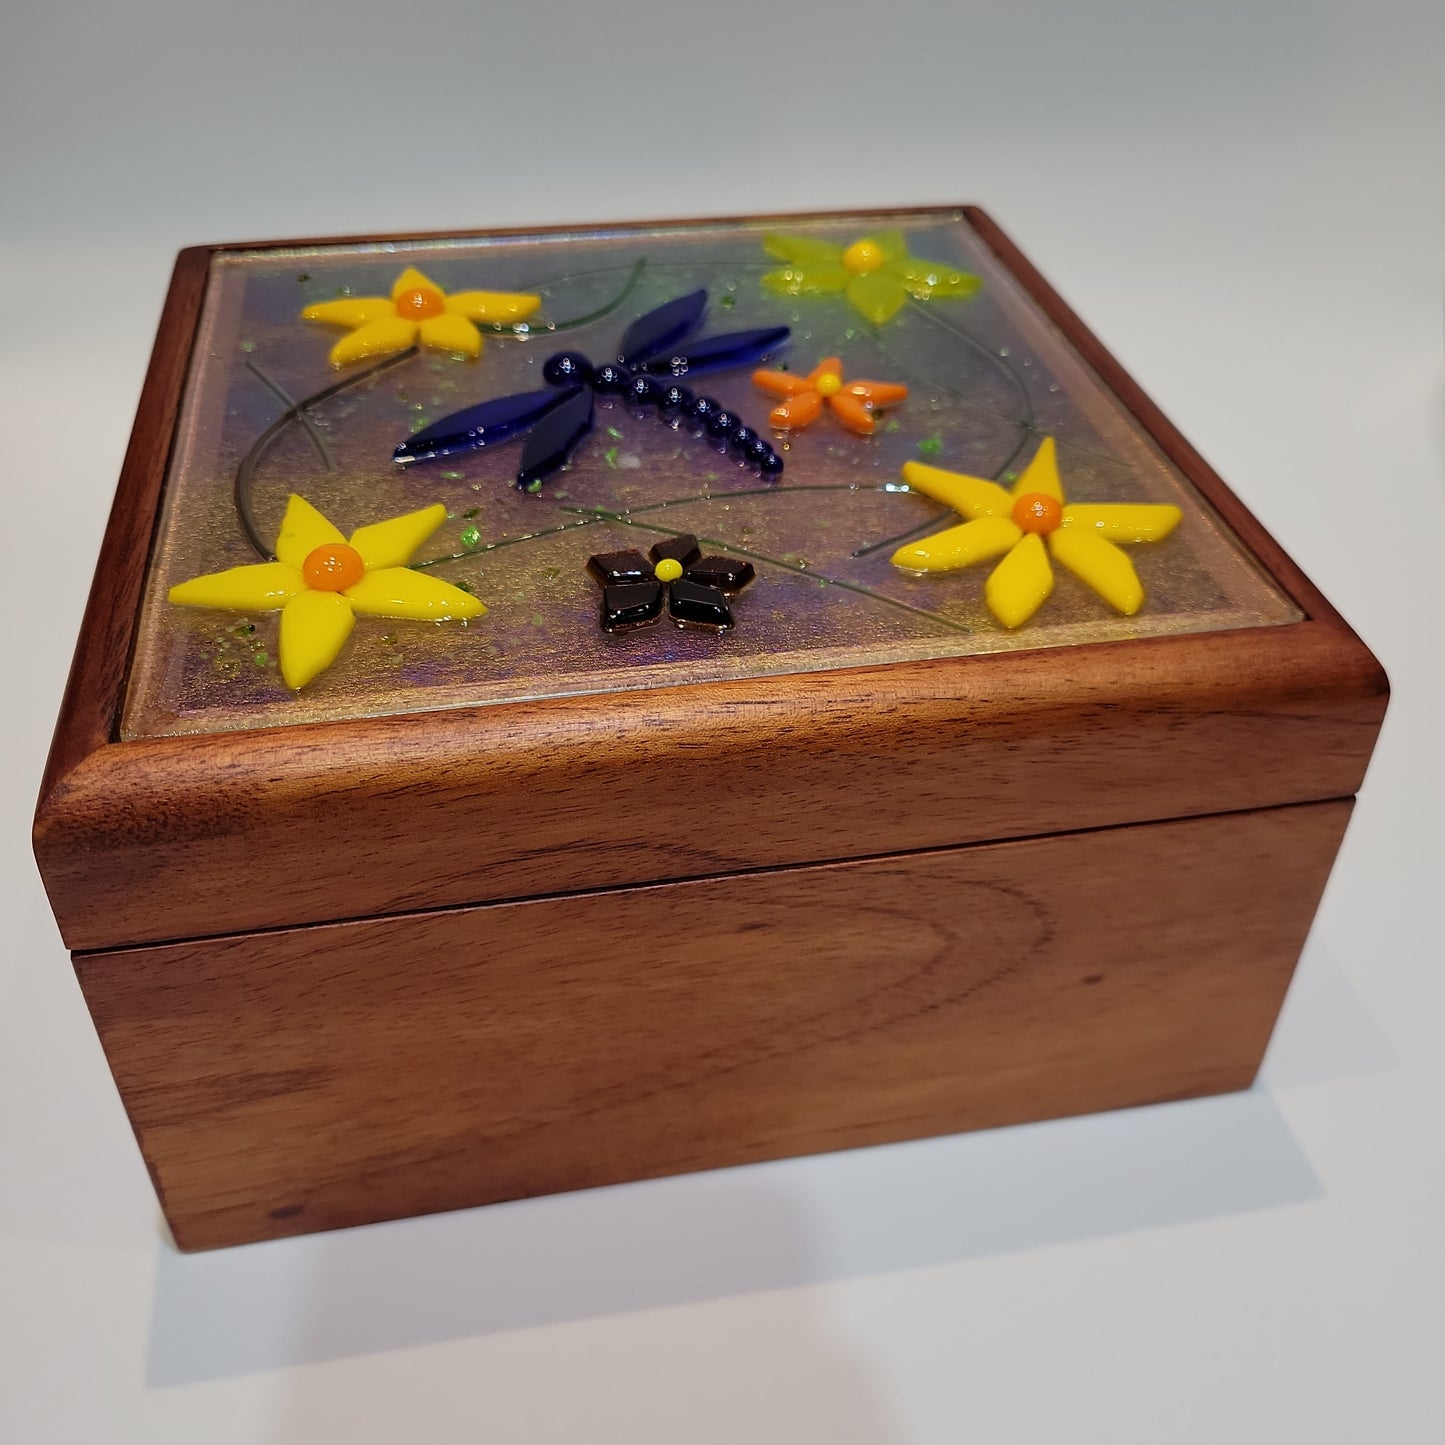 Wooden tea box - Dragonfly design